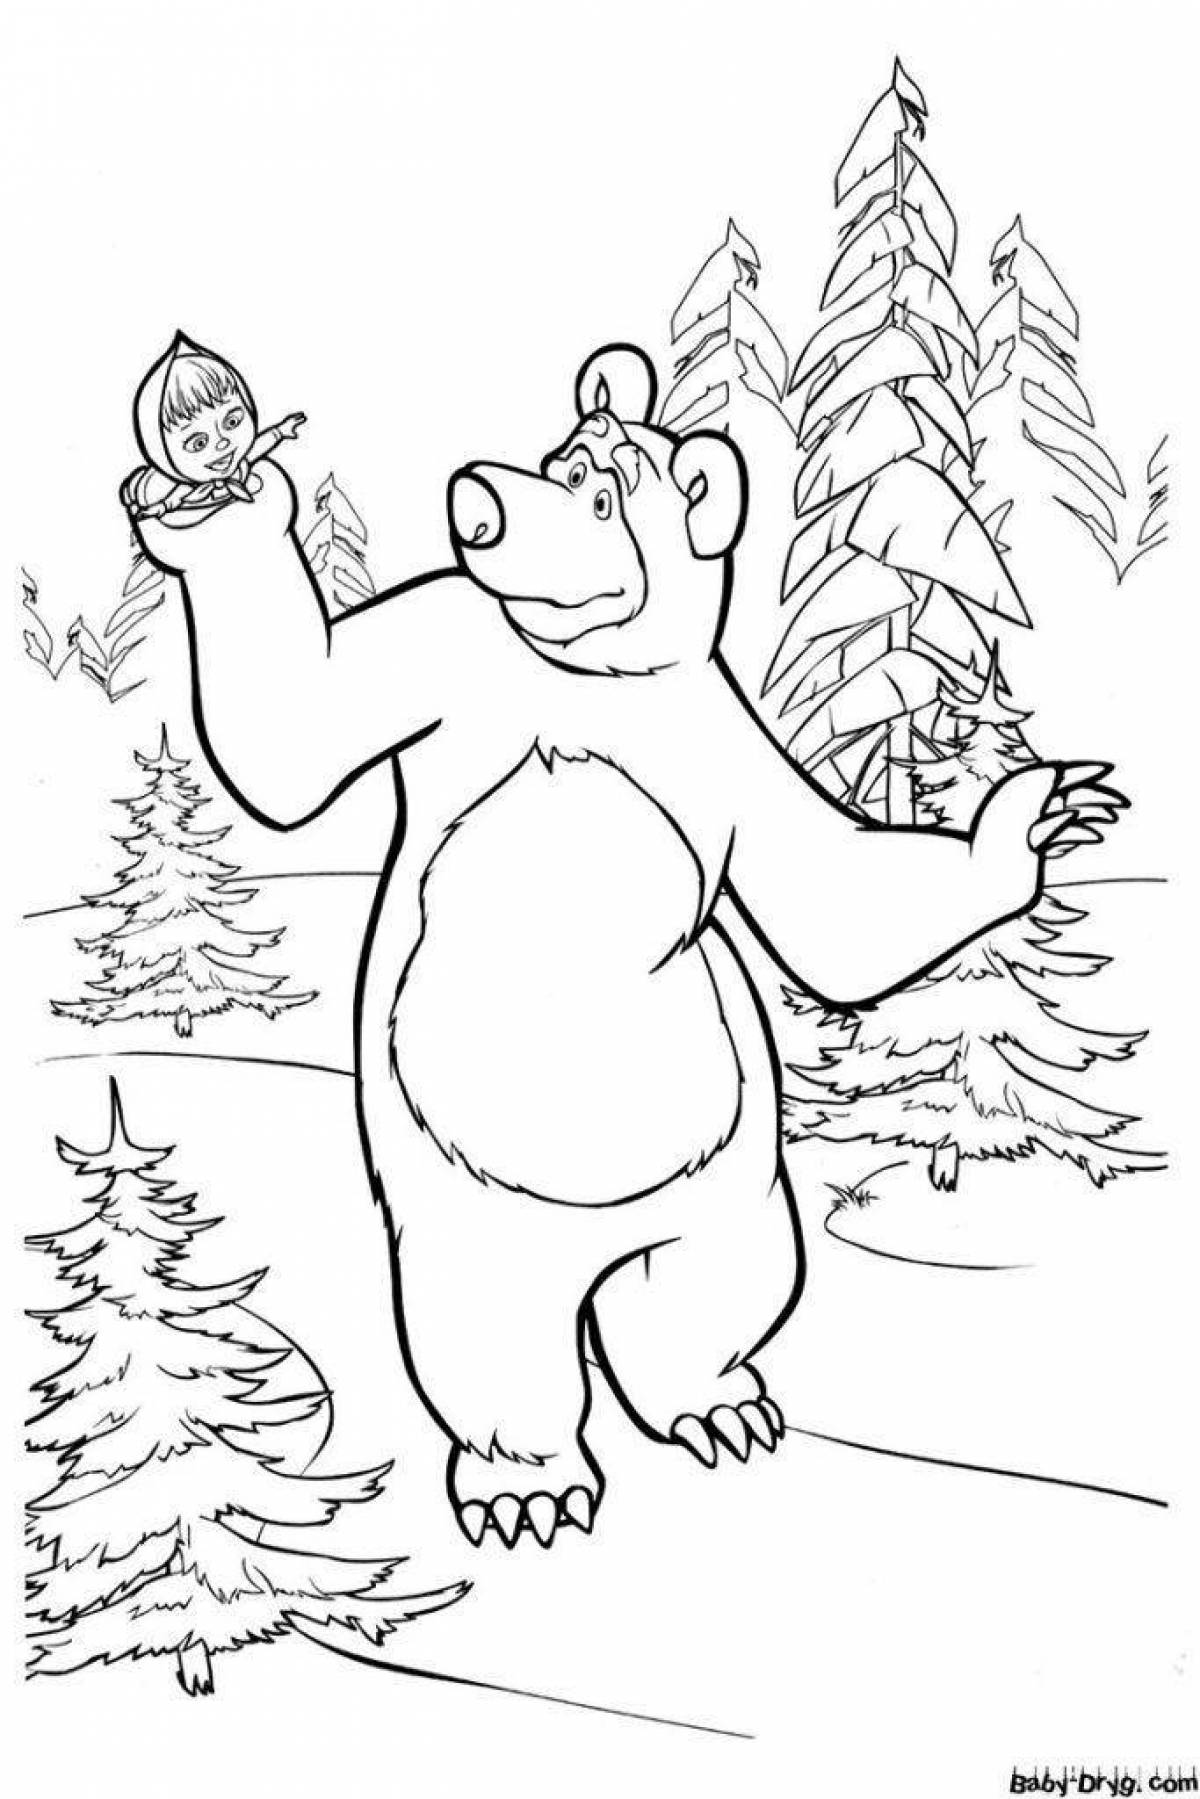 Adorable teddy bear-masha and bear coloring book